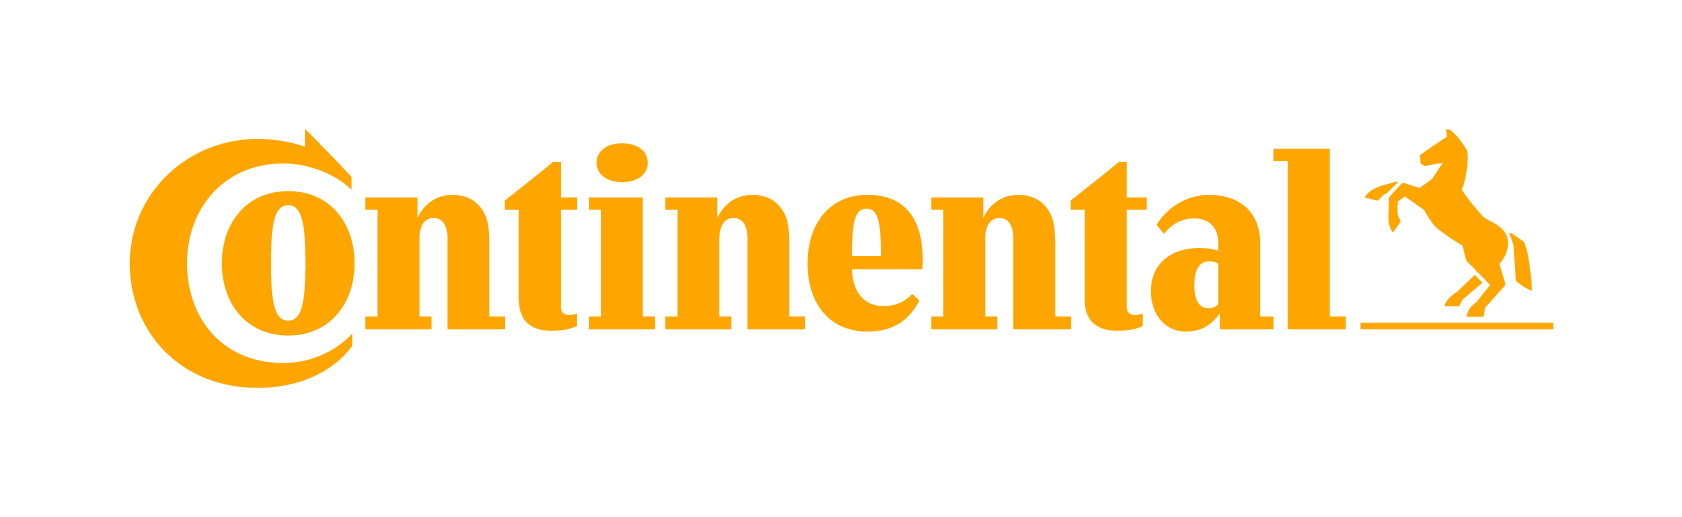 continental logo yellow srgb png-data